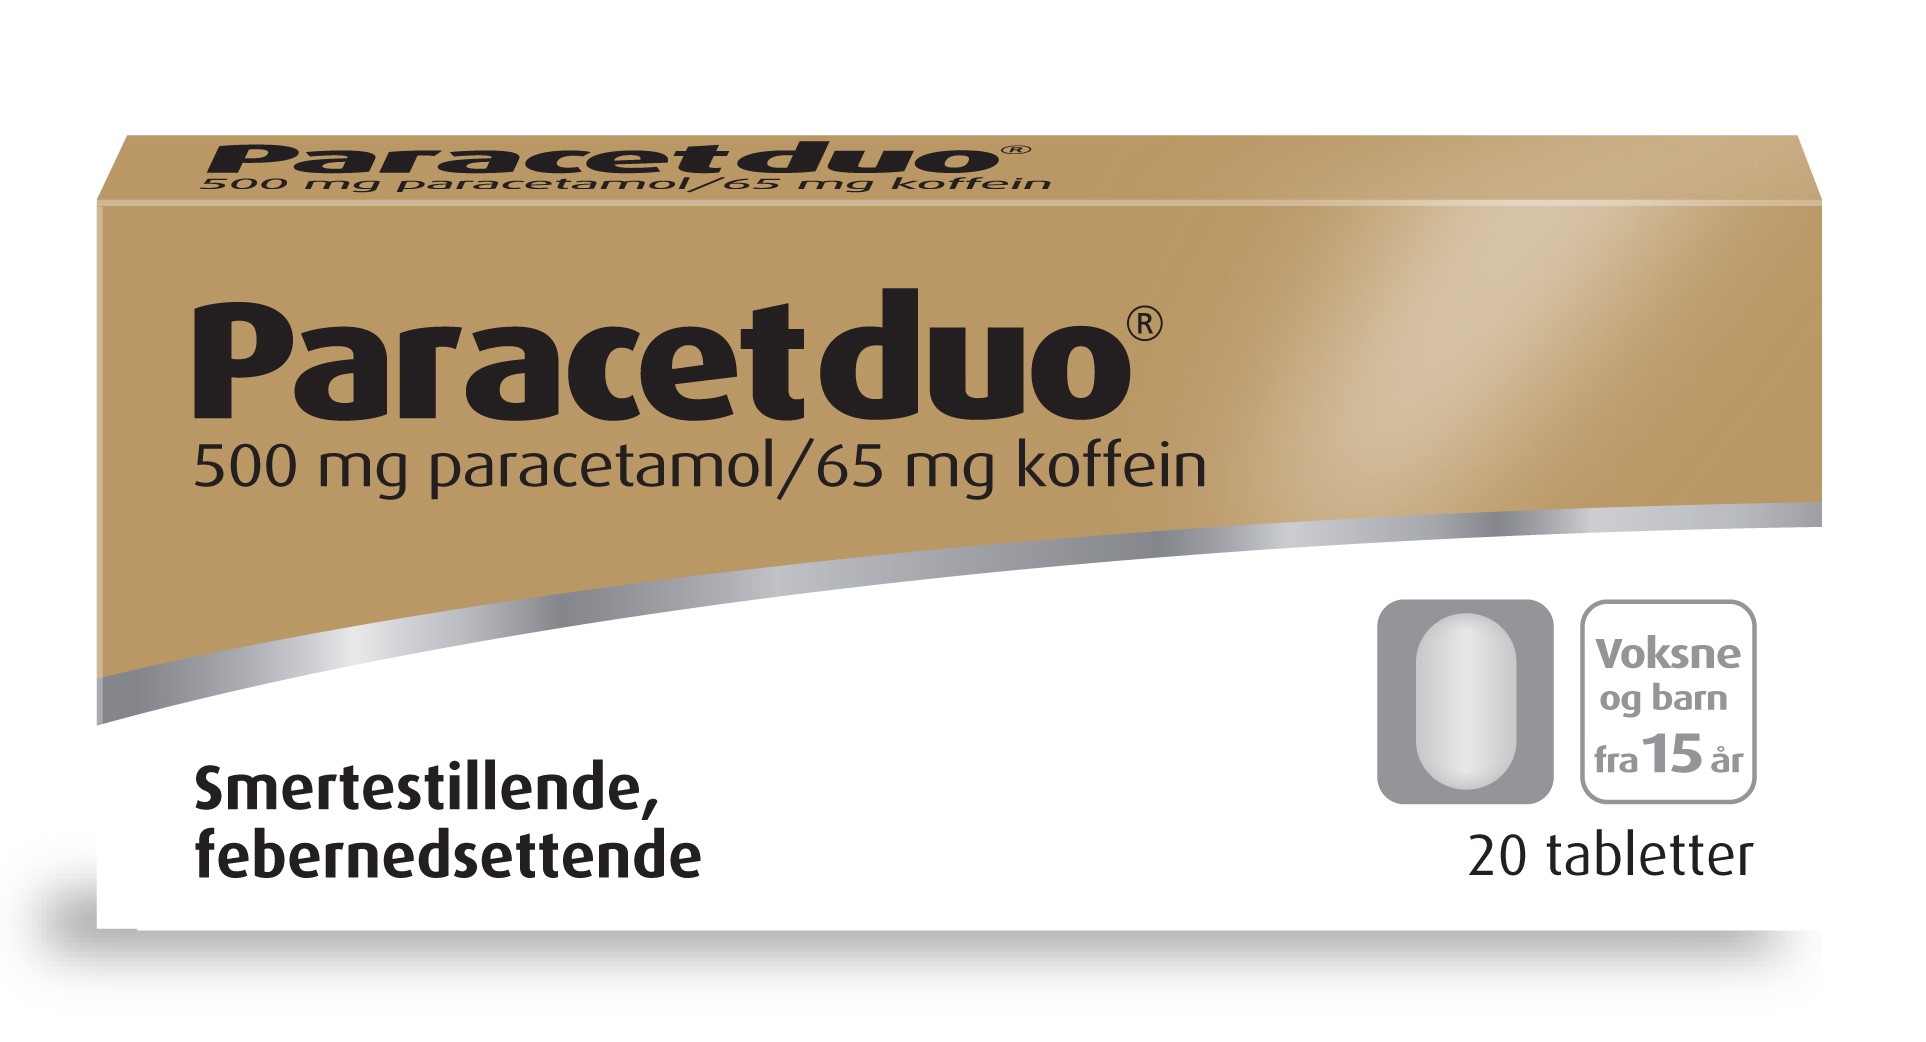 Paracetduo Tabletter, 500/65 mg, 20 stk. på brett